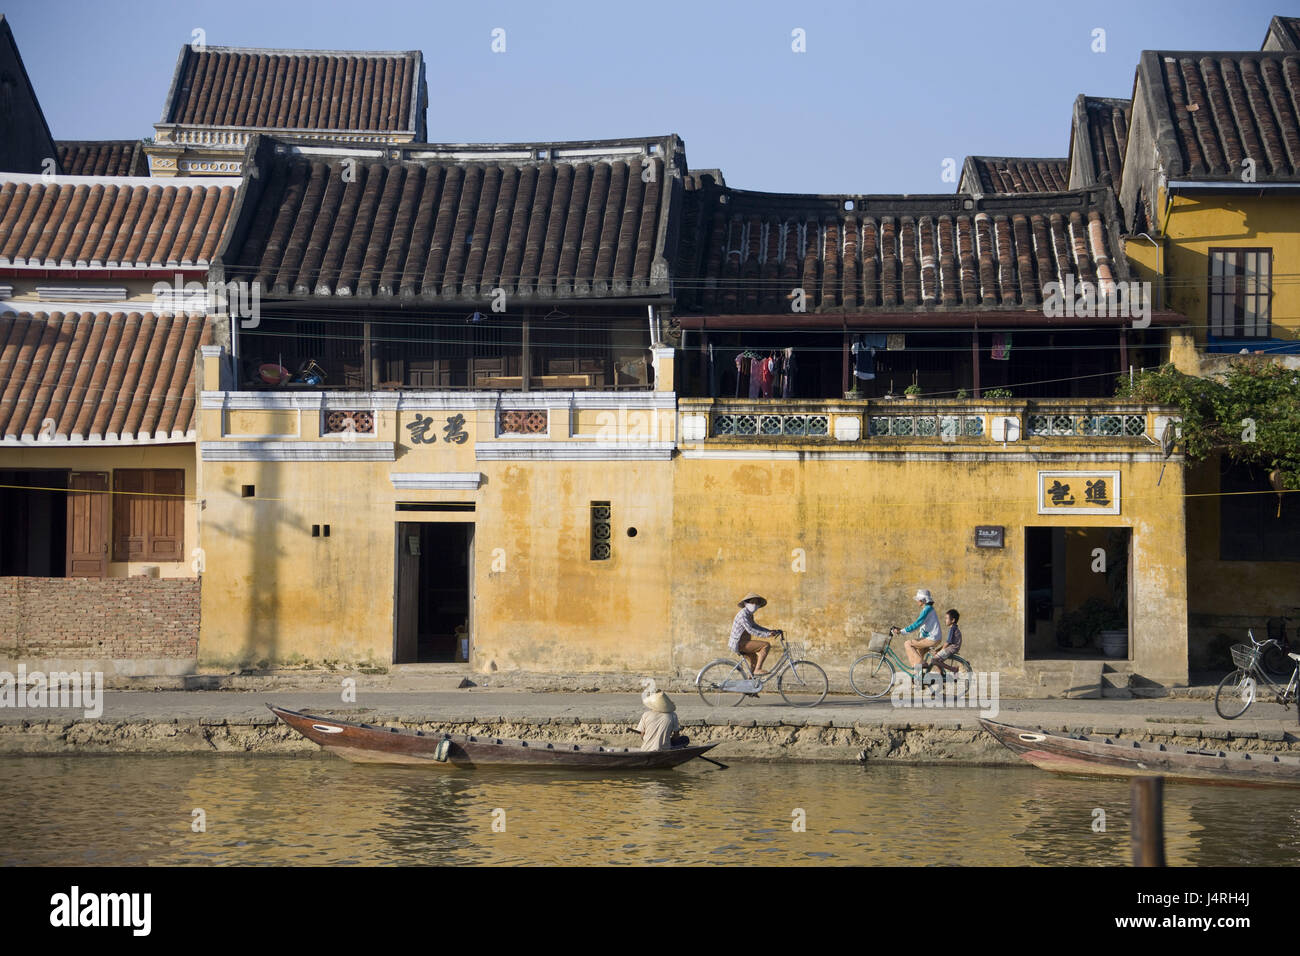 Vietnam, Hoi In, Tan Ky house, boat, fisherman, cyclist, Stock Photo